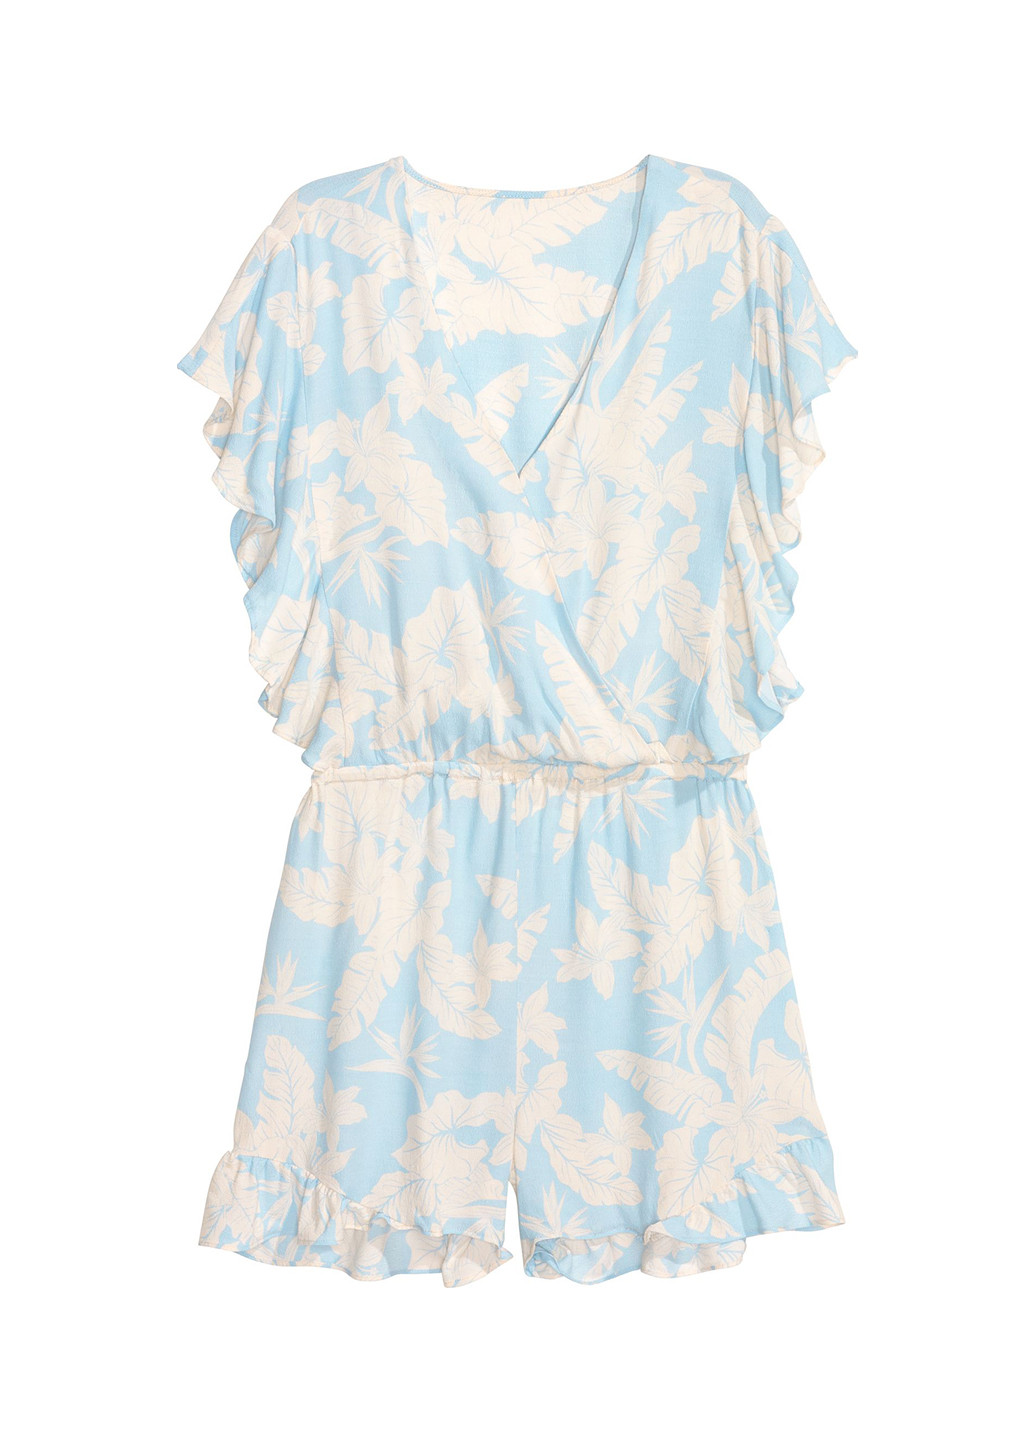 Комбинезон H&M комбинезон-шорты цветочный голубой кэжуал вискоза